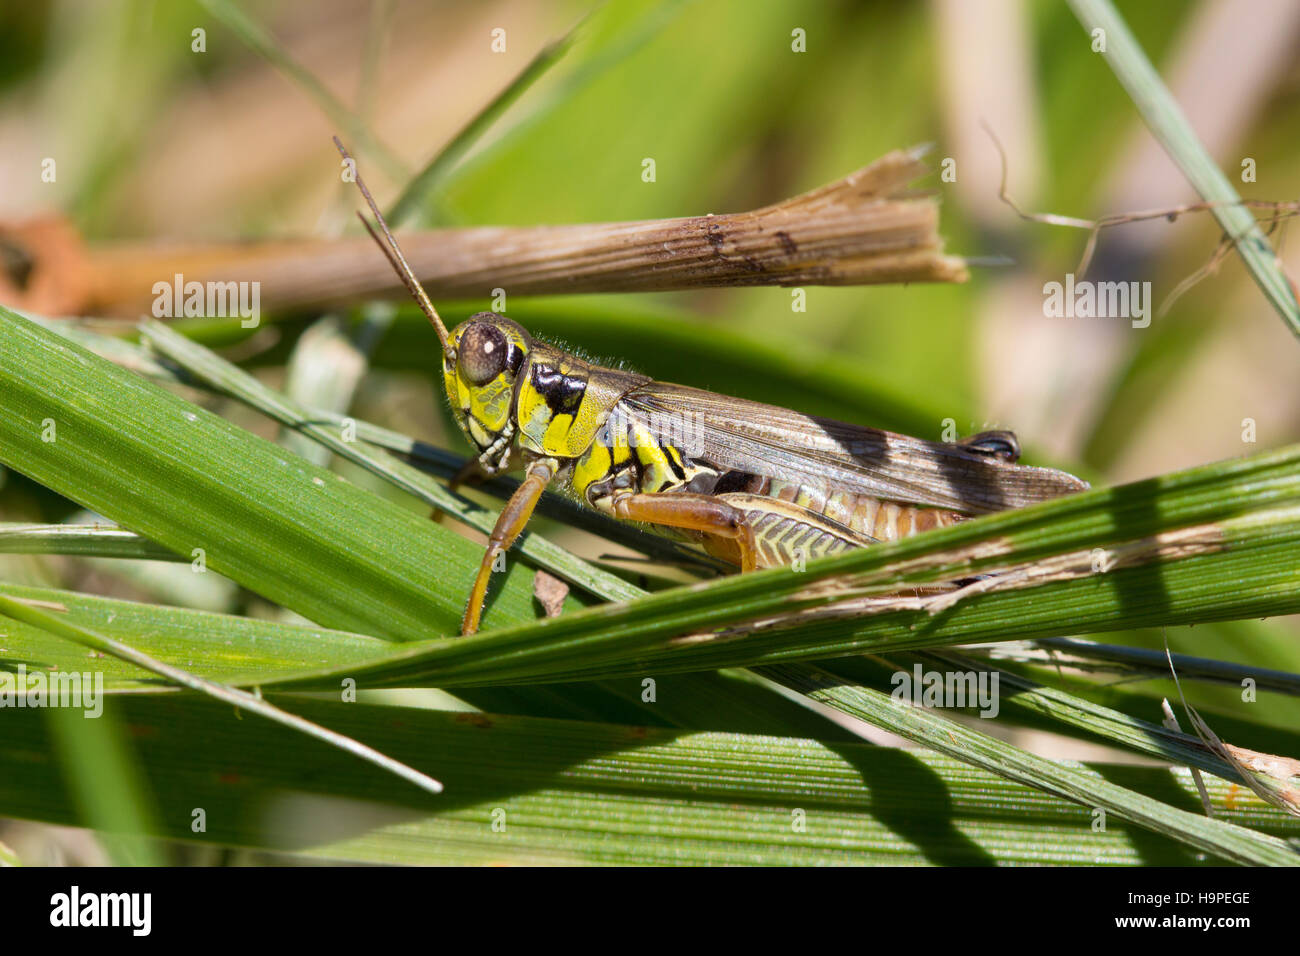 A spur-throated grasshopper (Melanoplinae) sitting on grass, Indiana, United States Stock Photo